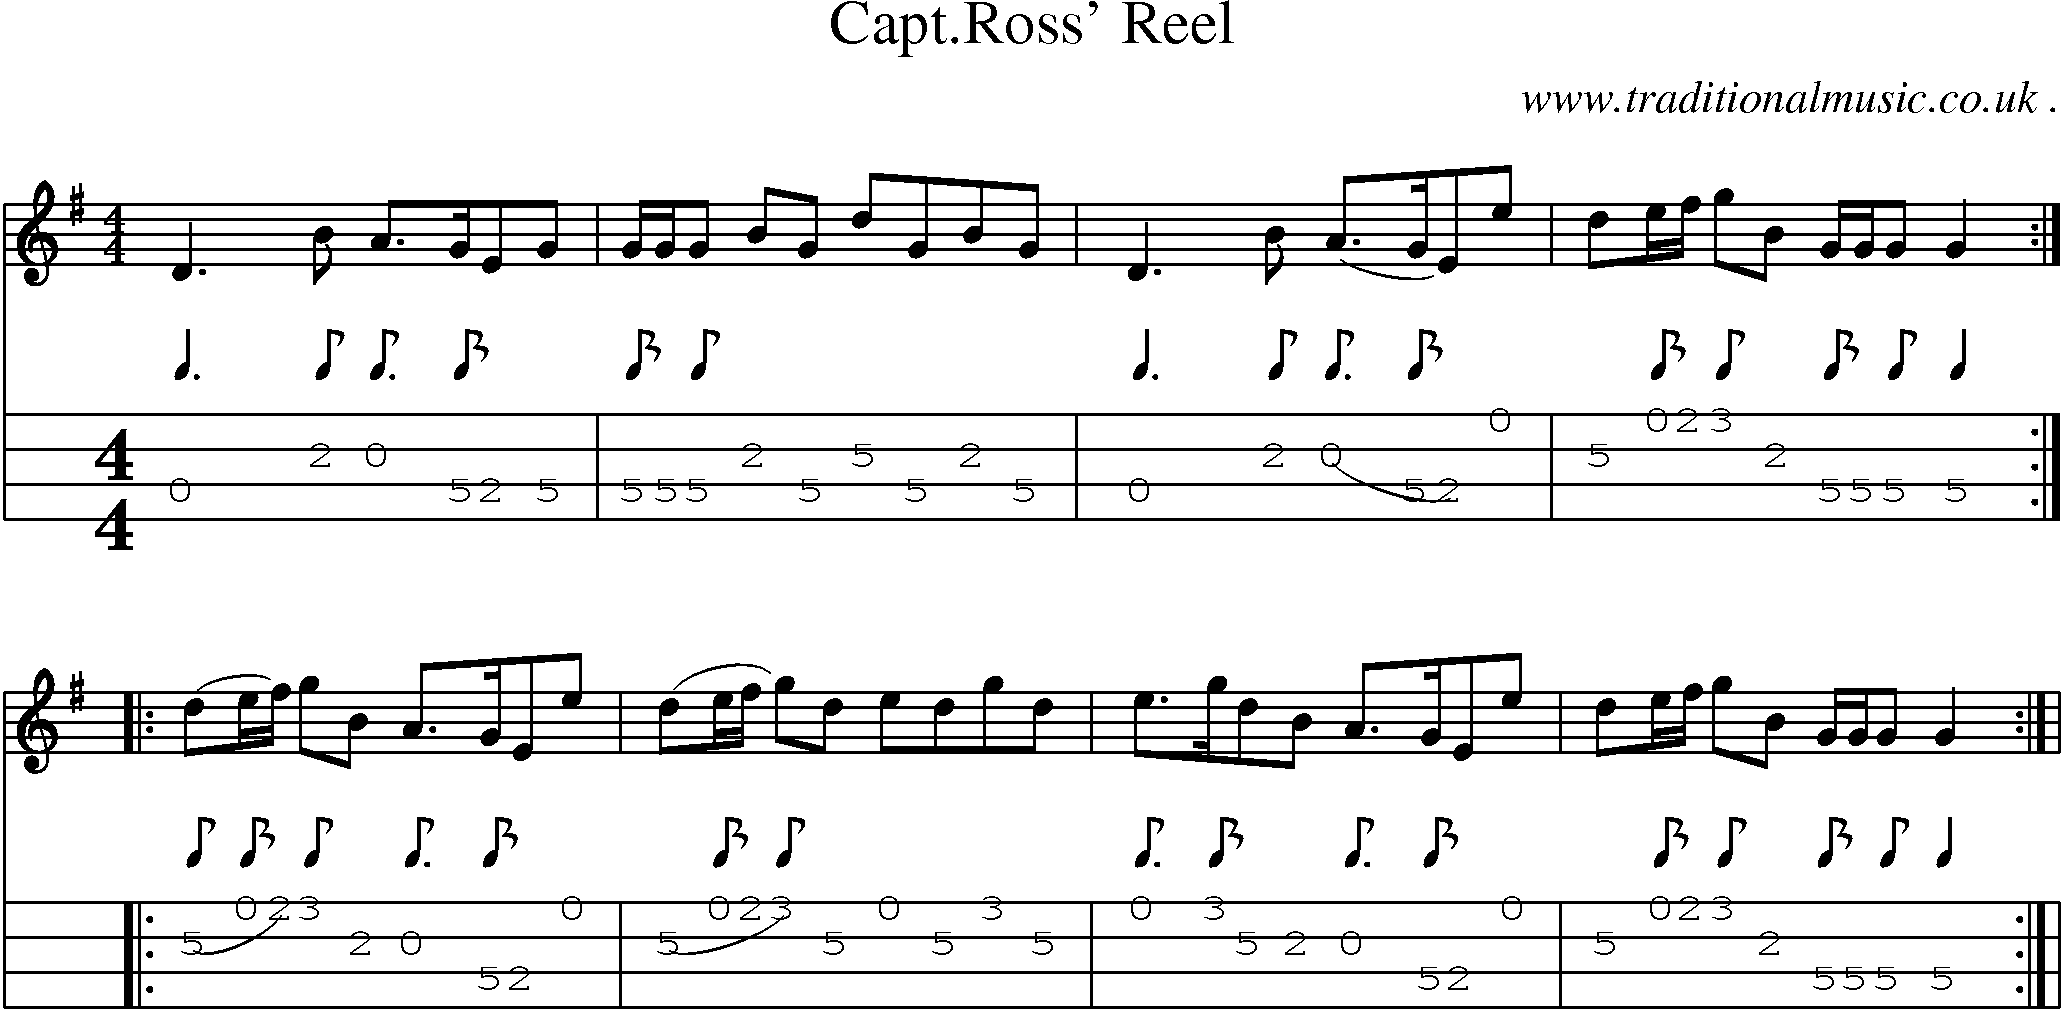 Sheet-Music and Mandolin Tabs for Captross Reel